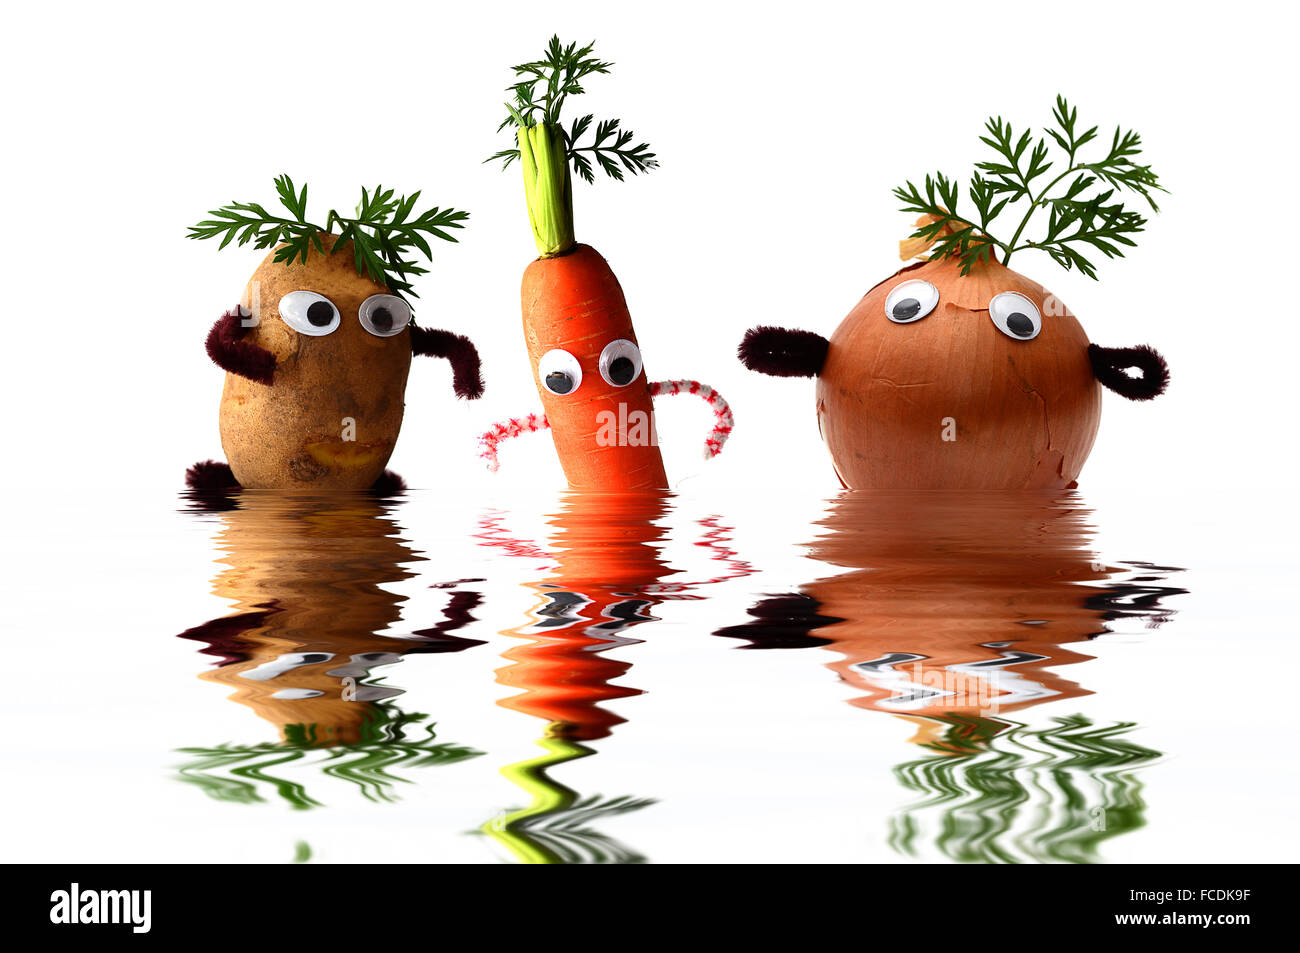 Patata, zanahoria y cebolla en agua con caras, imagen simbólica para comer sano Foto de stock